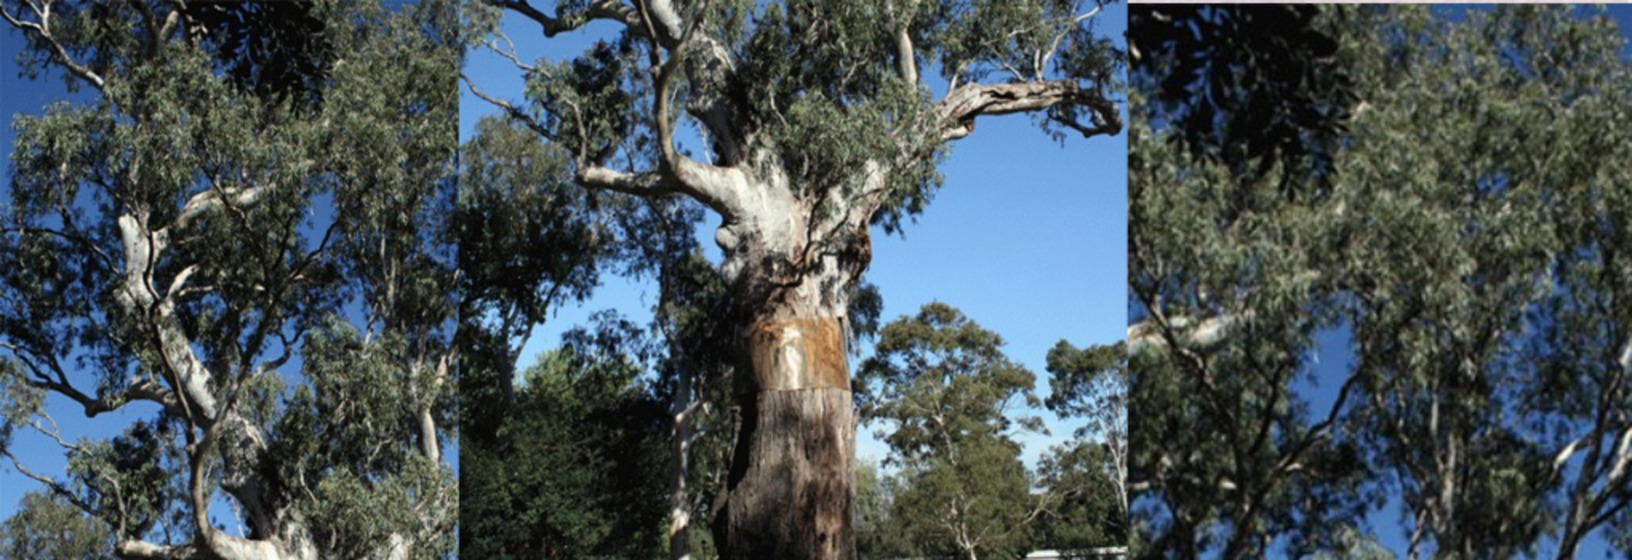 views of a tree in three segments